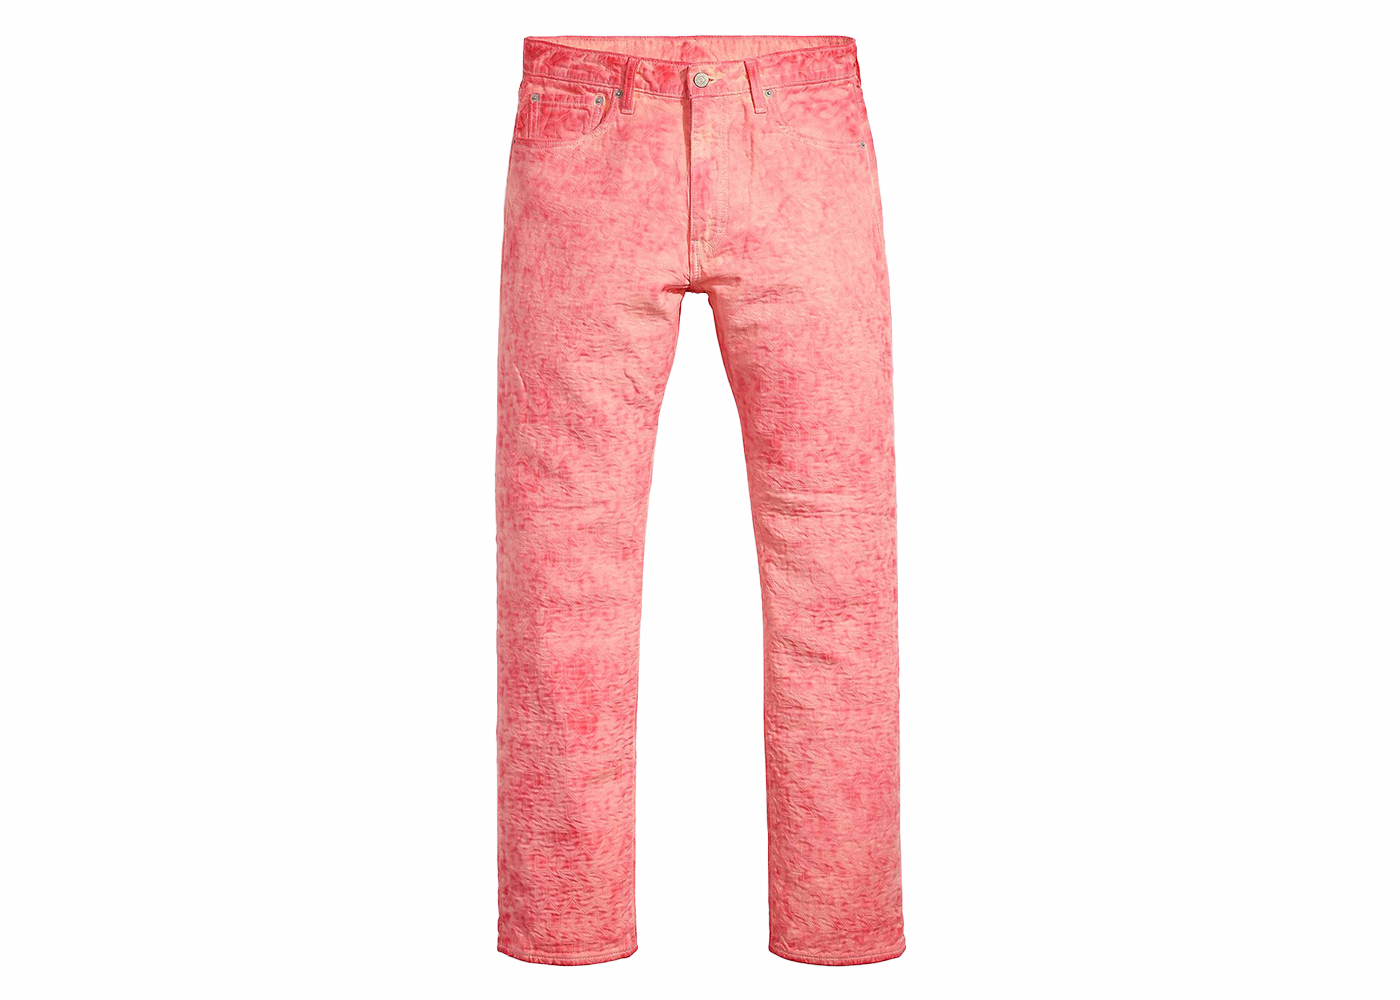 Stussy x Levi's Dyed Jacquard Jeans Pink